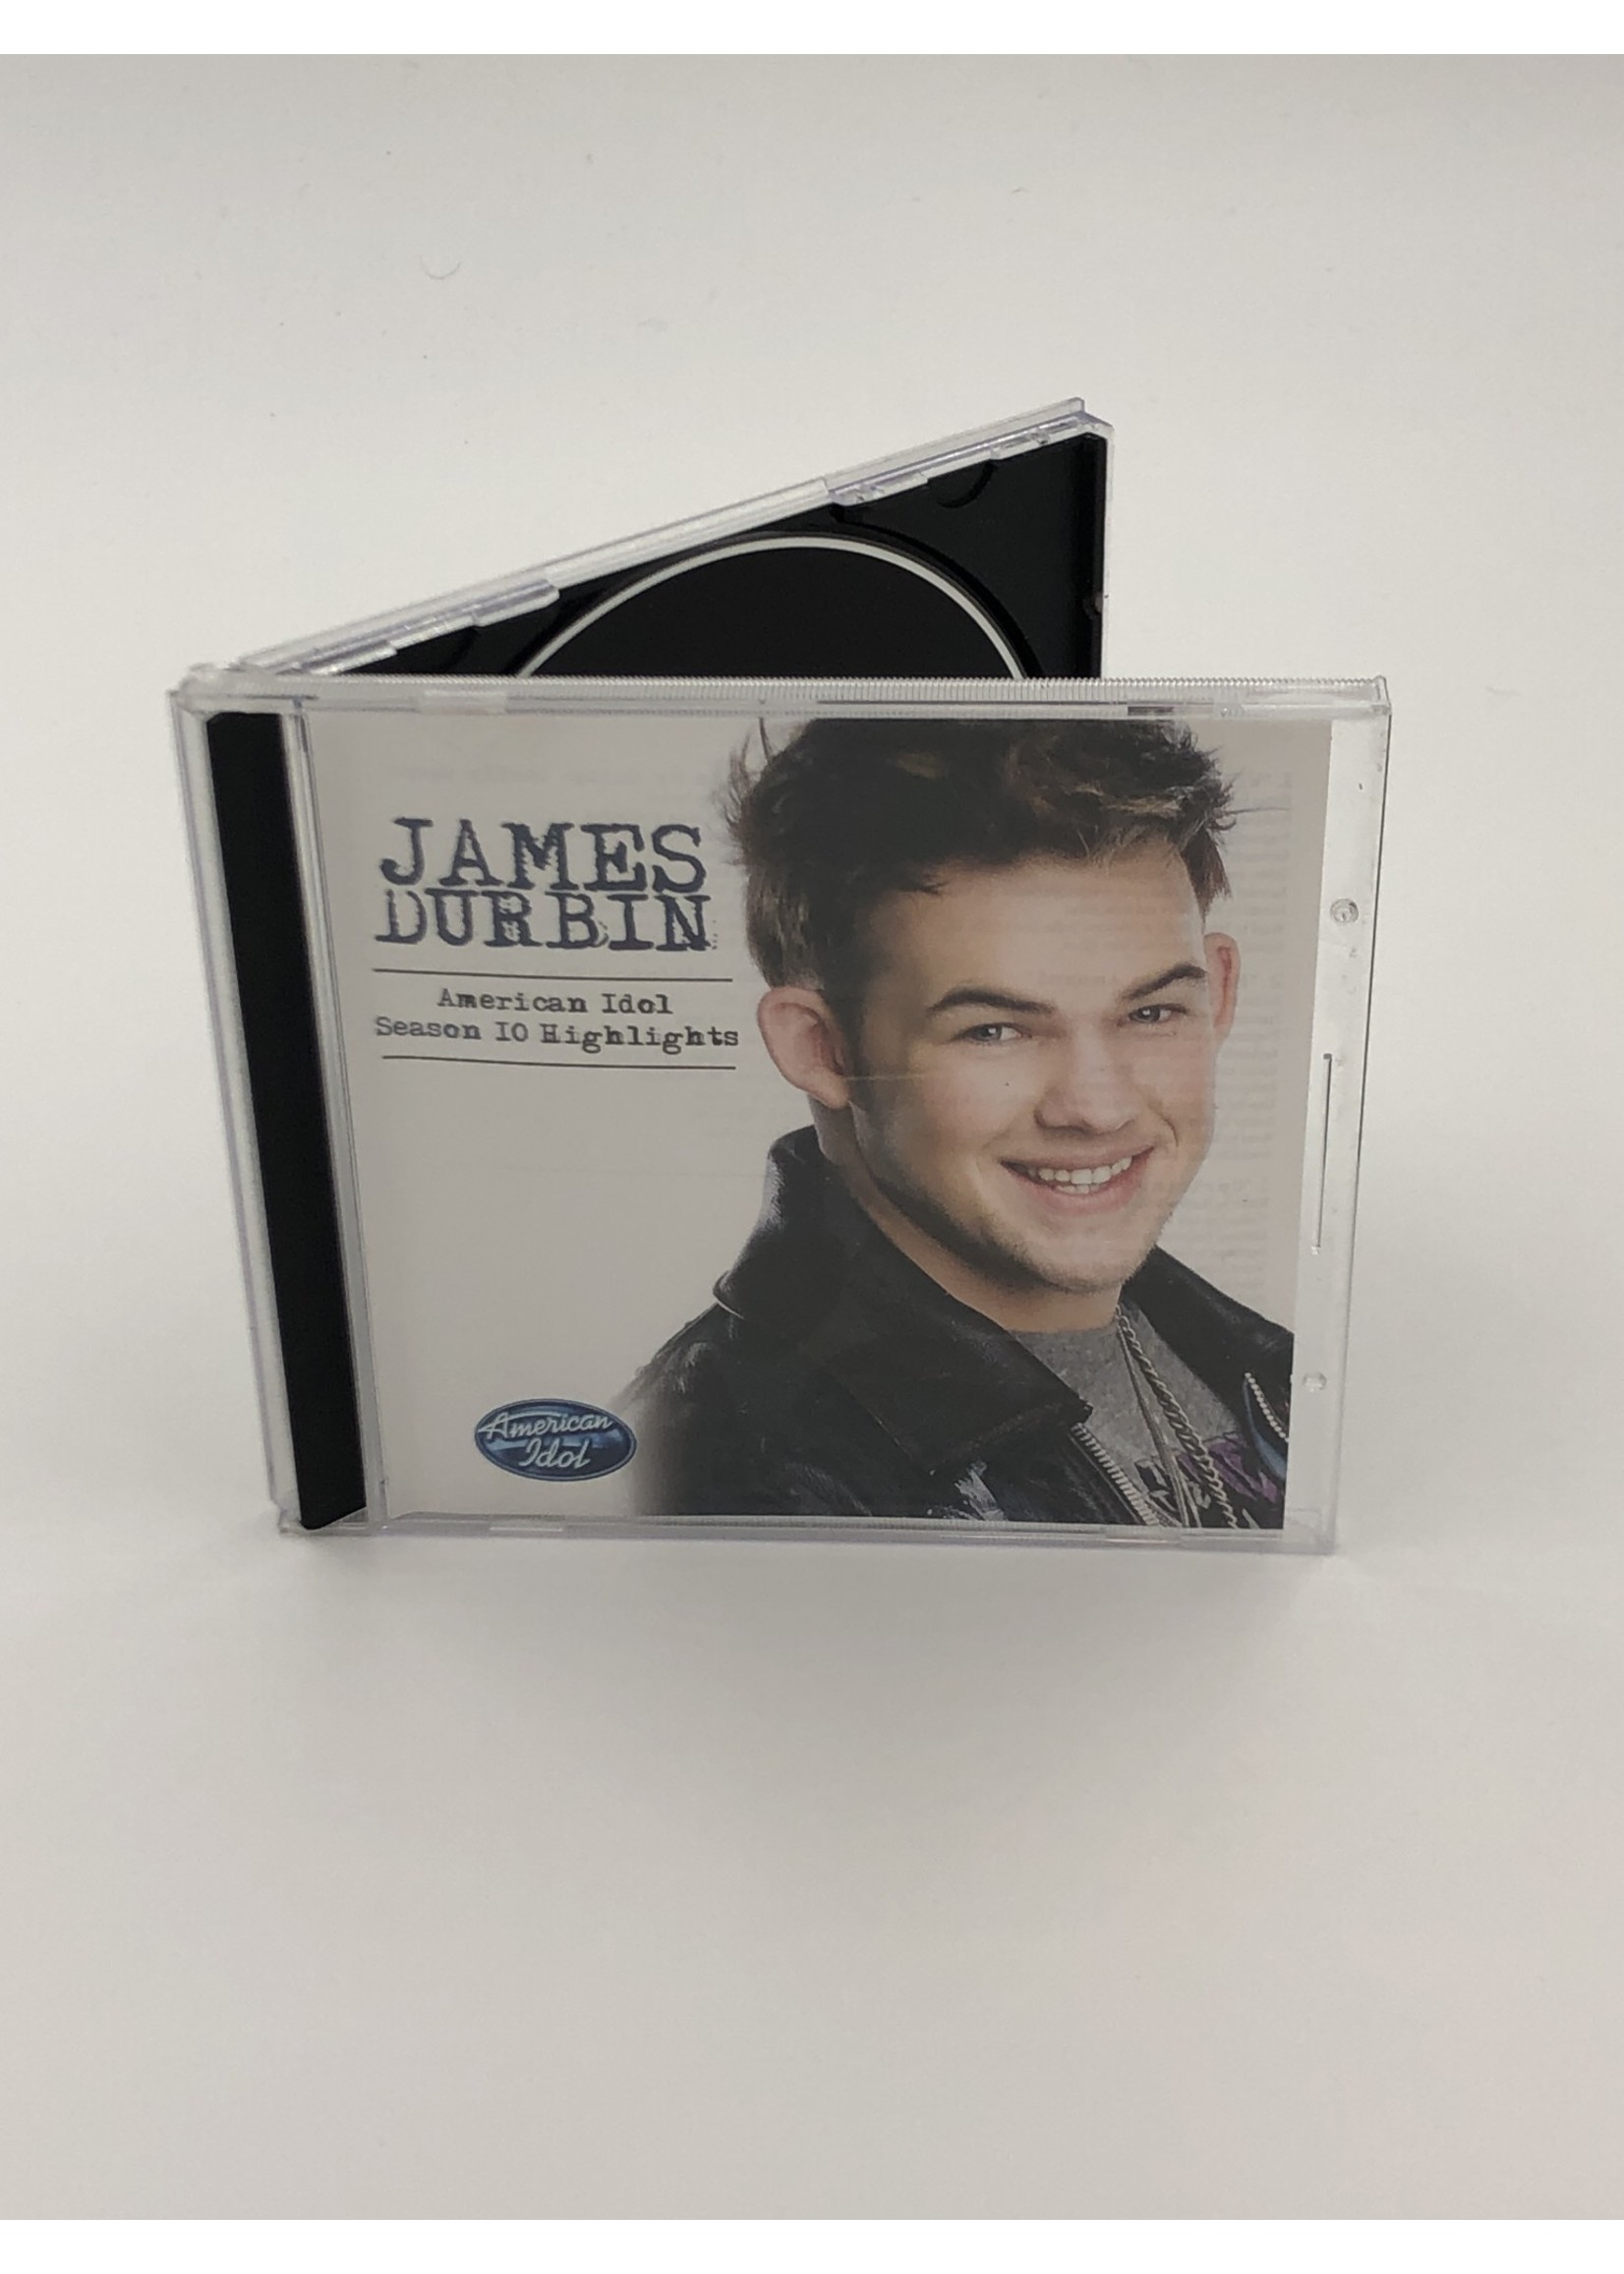 CD James Durbin: American Idol Season 10 Highlights CD